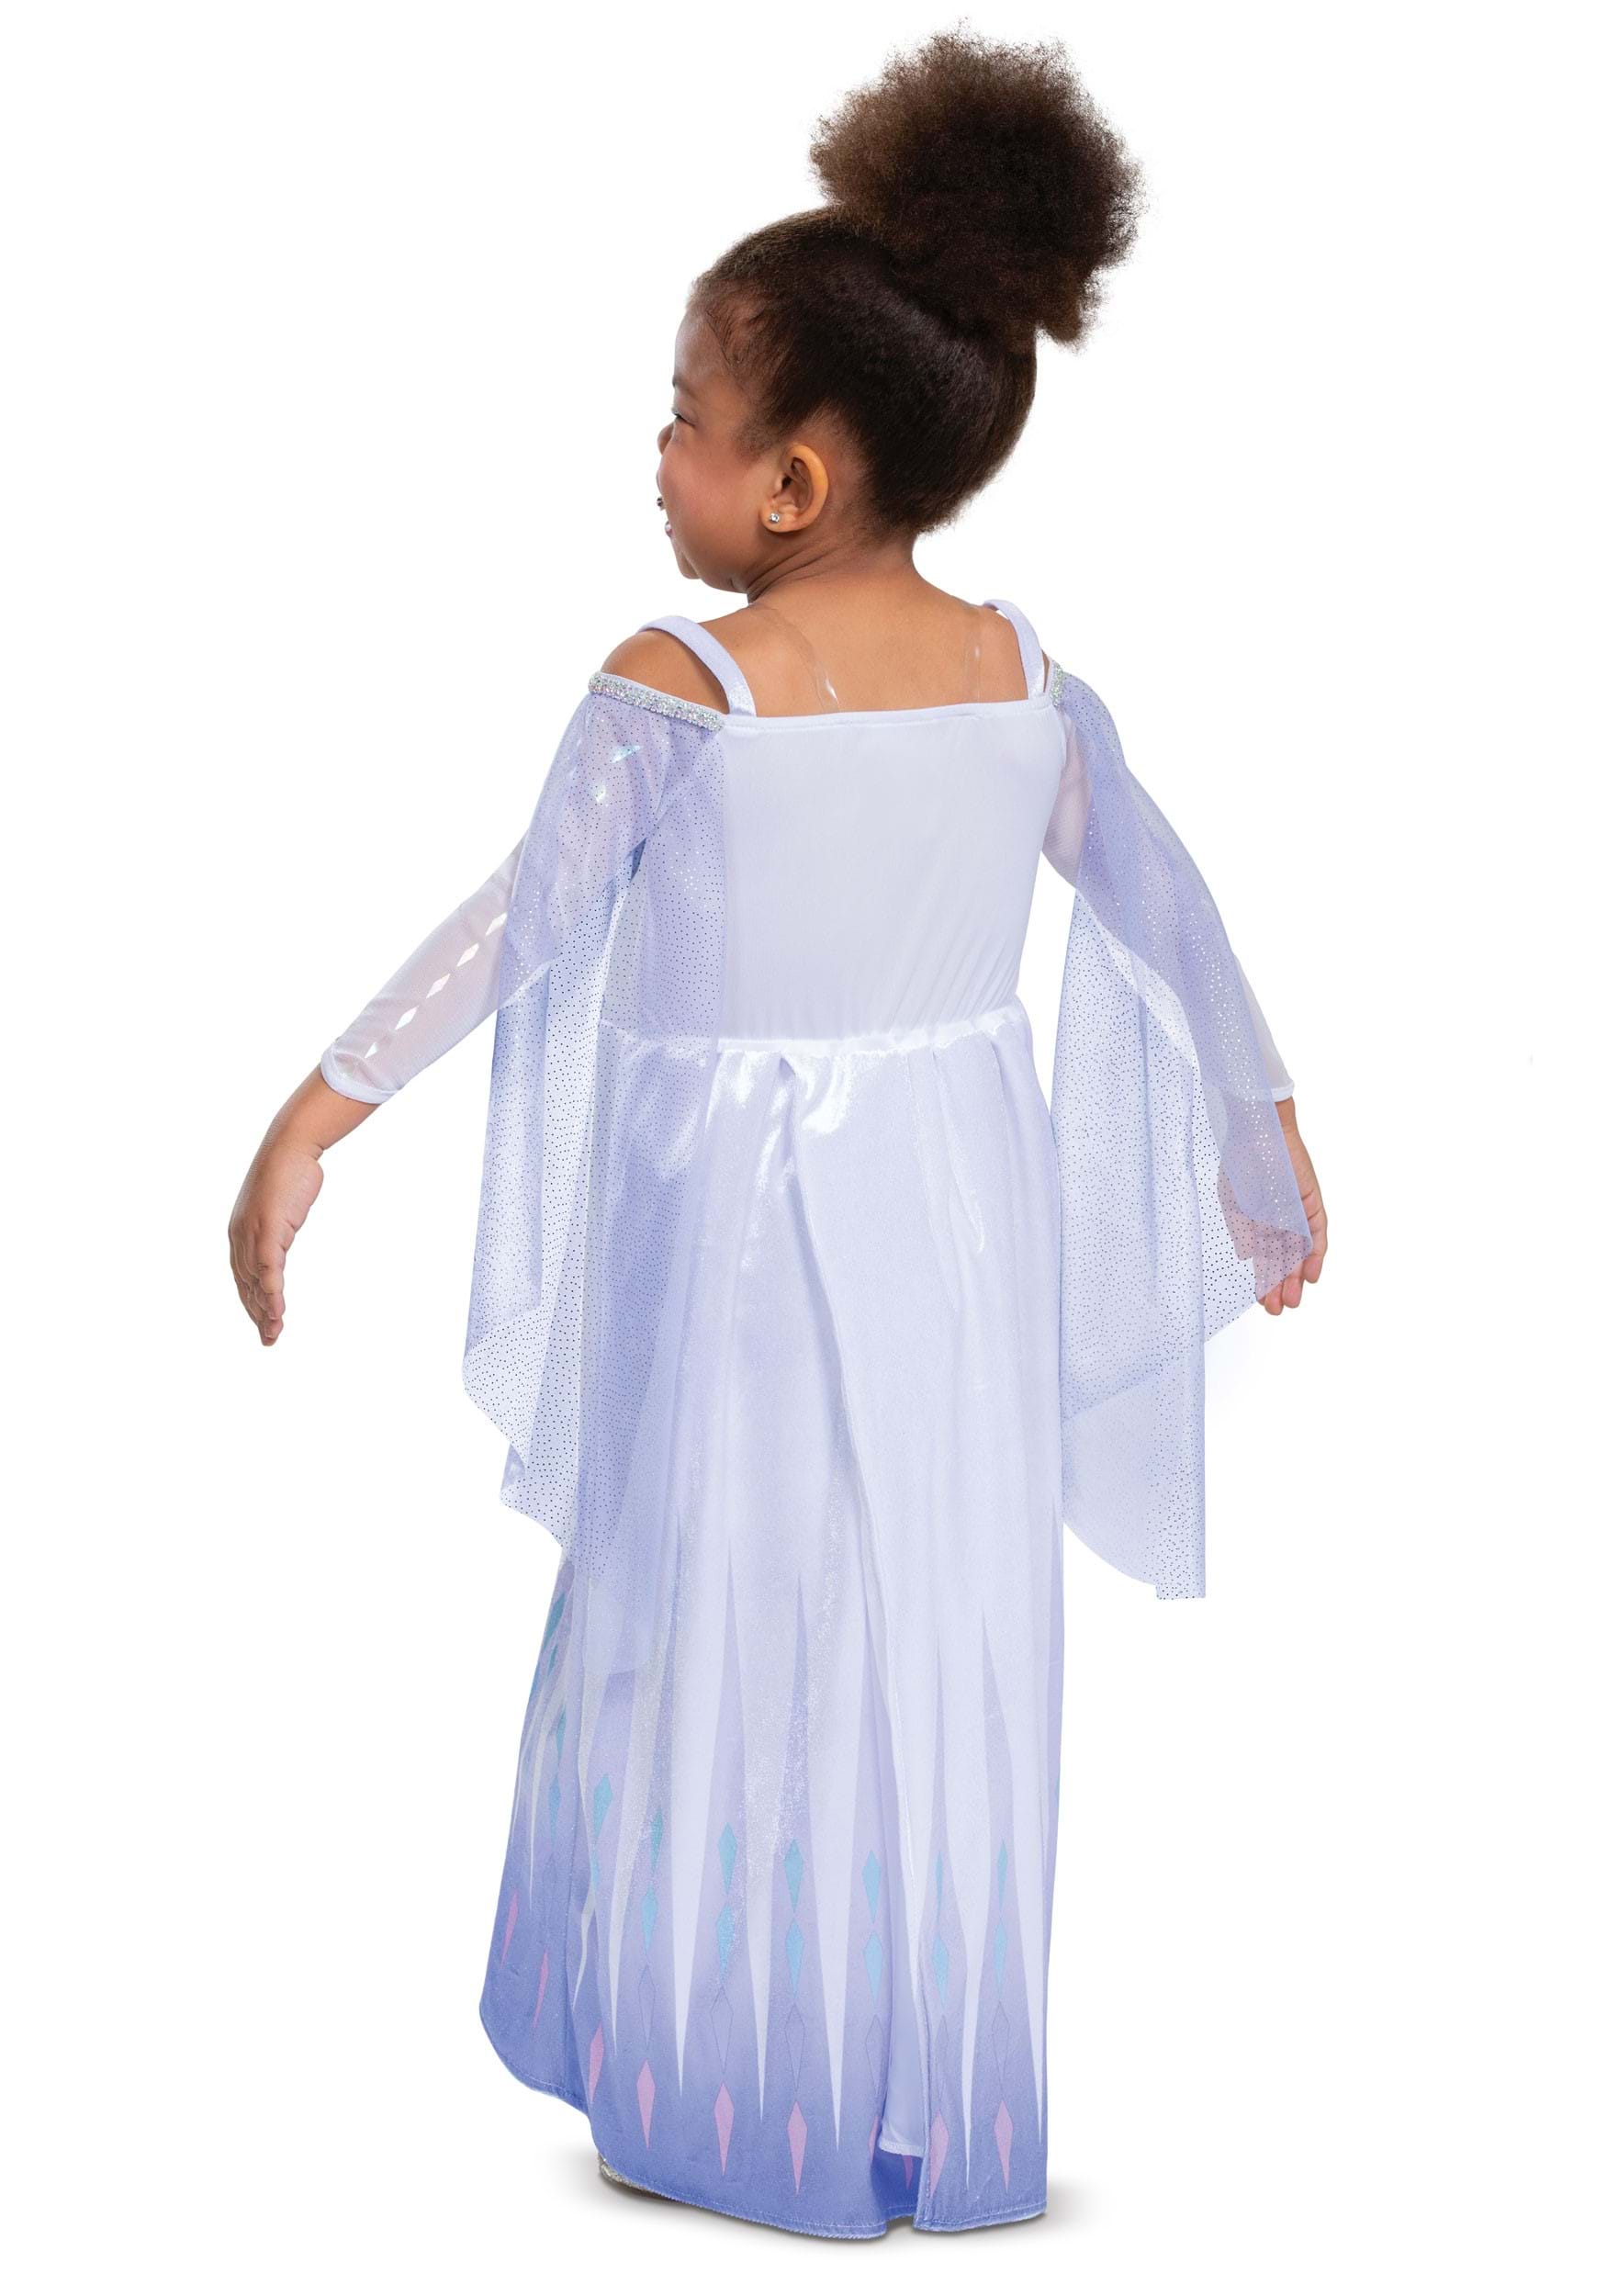 Kids Frozen Elsa Adaptive Costume